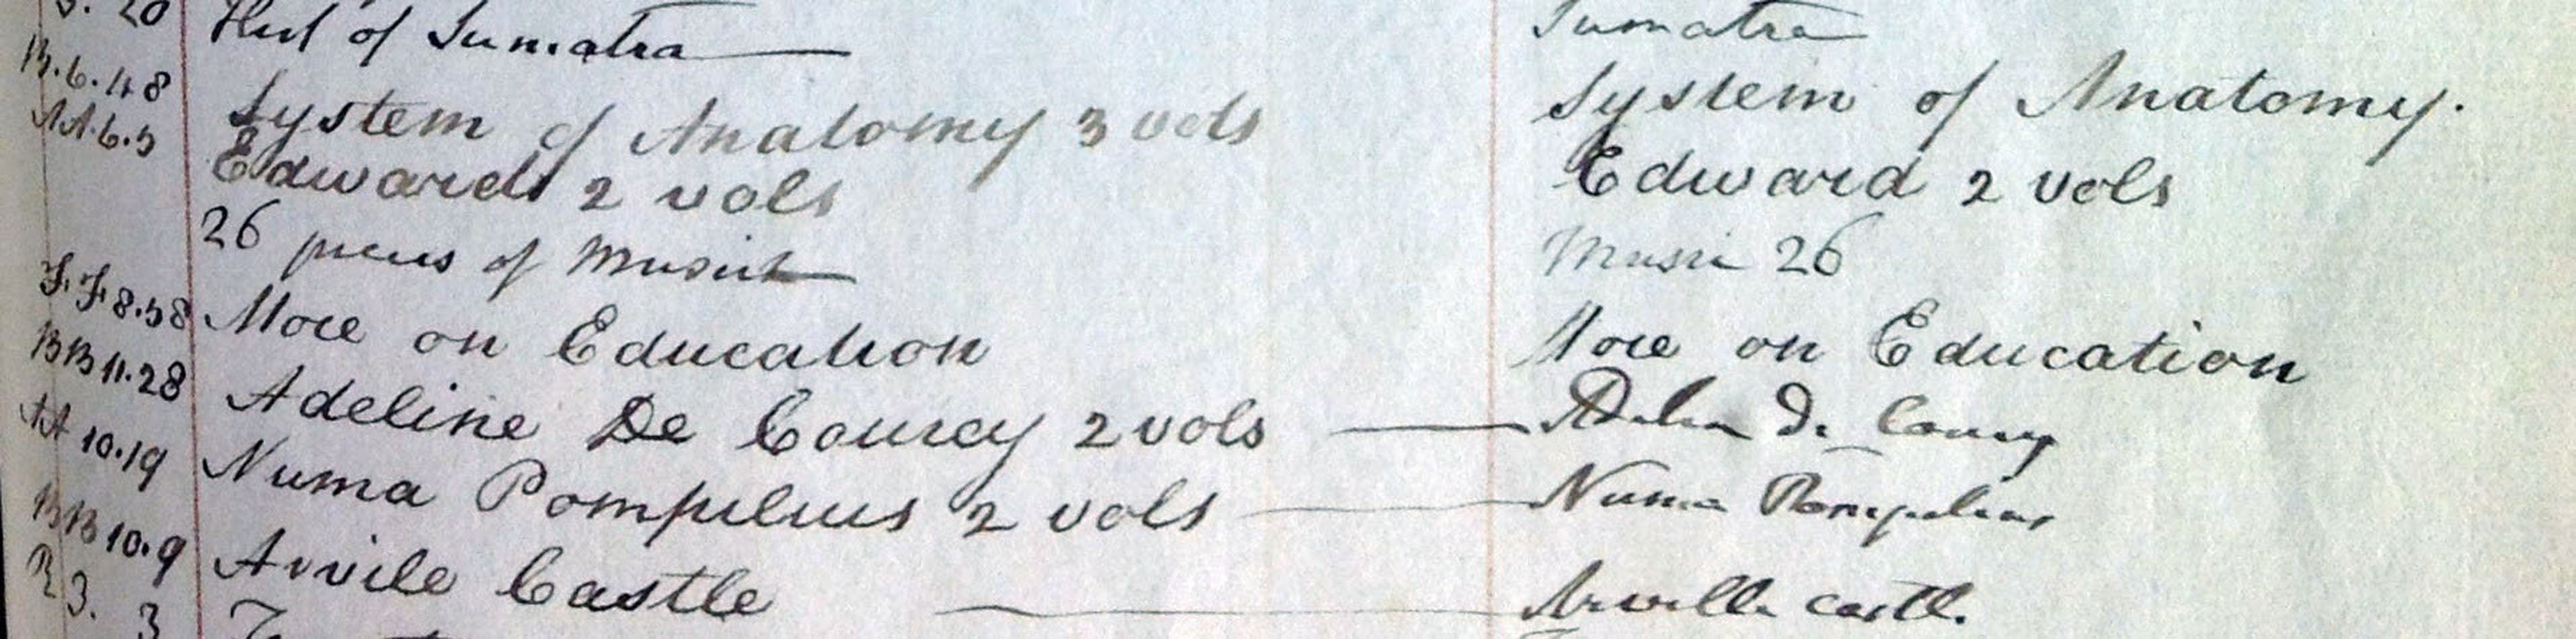 Principal Playfair’s borrowing record, 26th September 1800. UYLY206/4 (1791-1800)